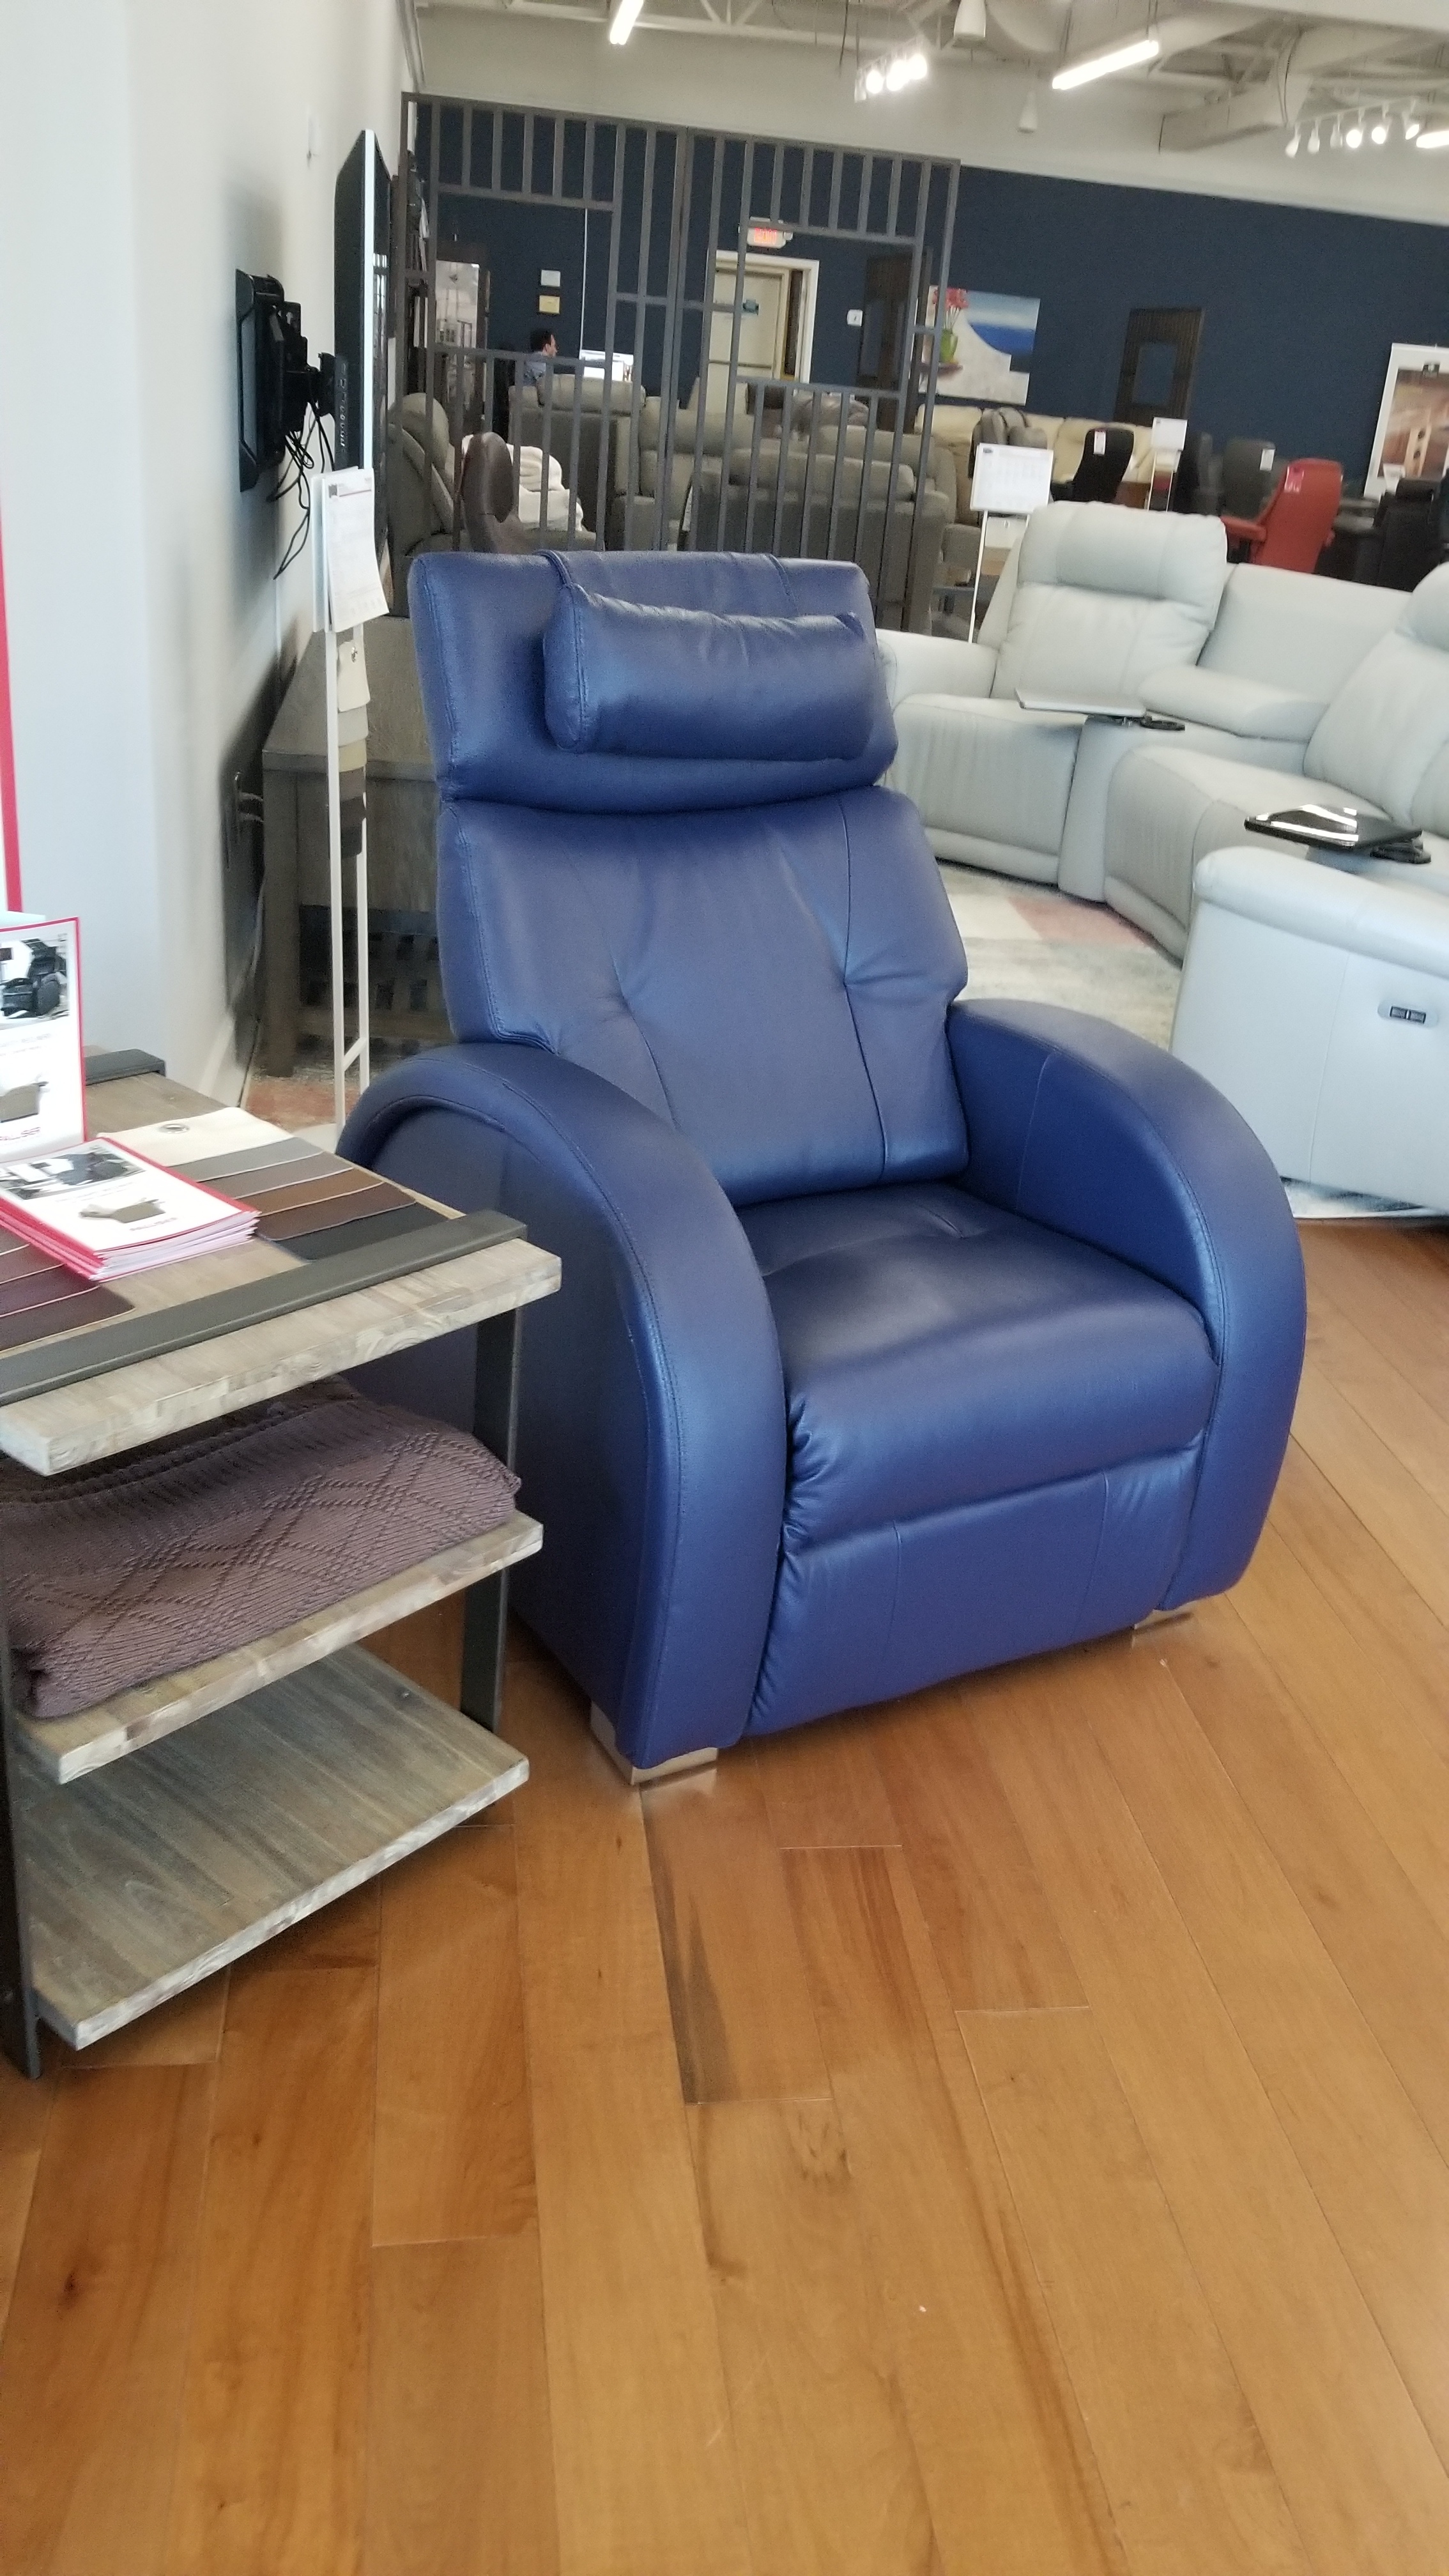 Palliser Zg4 Zero Gravity Chair Clearance Showroom Specials